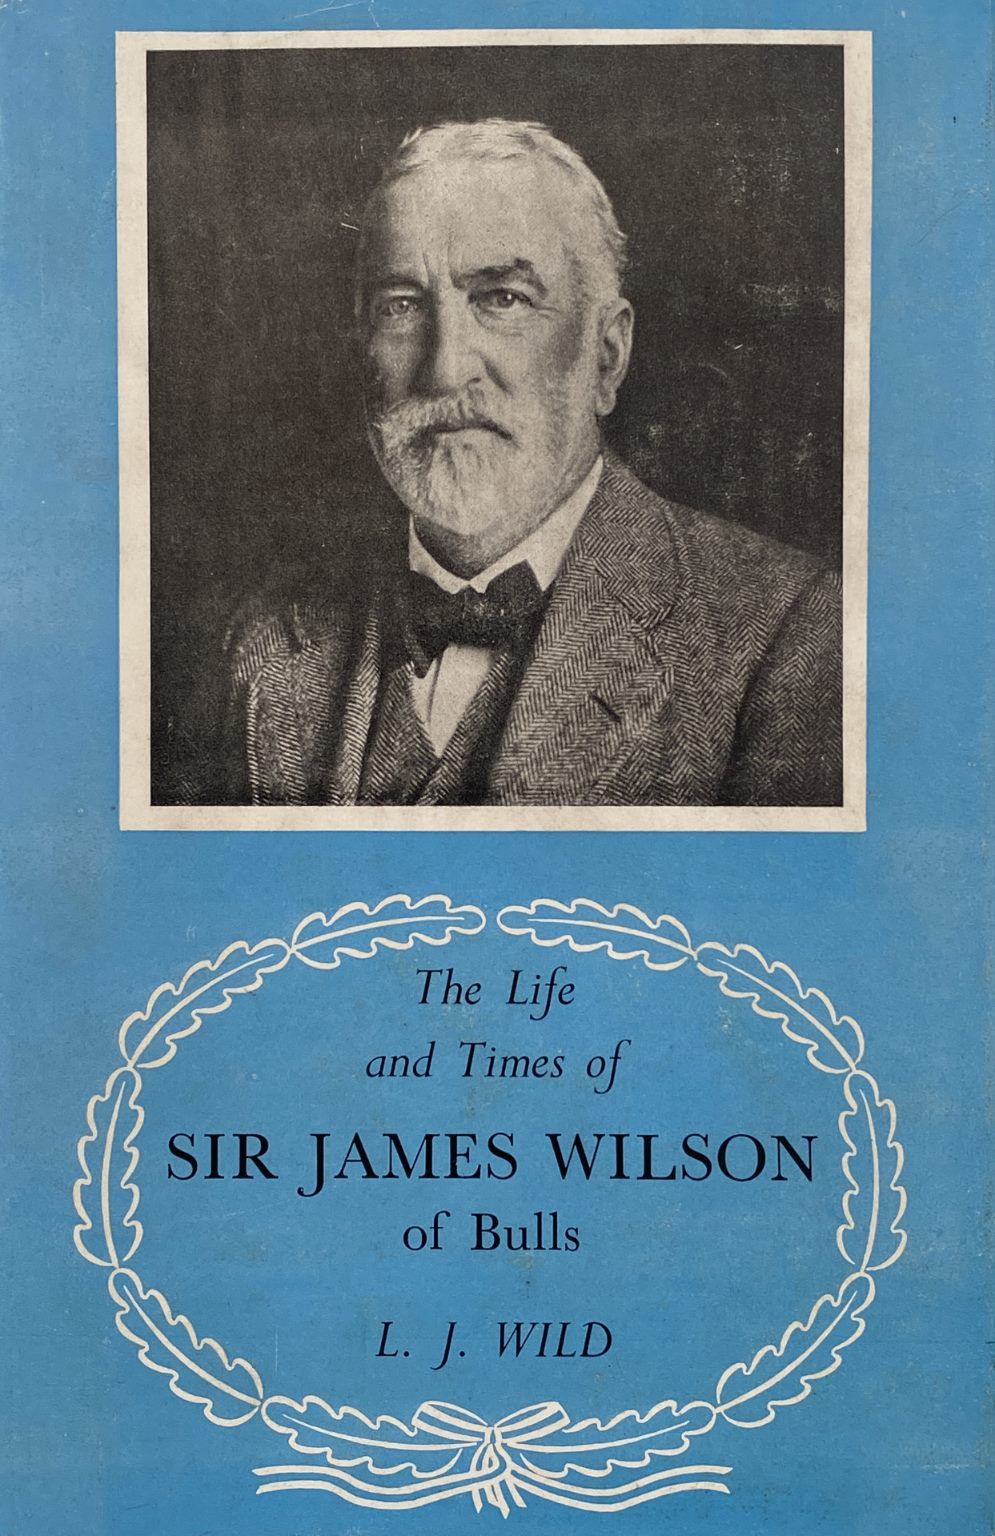 SIR JAMES WILSON of Bulls - the Life and Times of